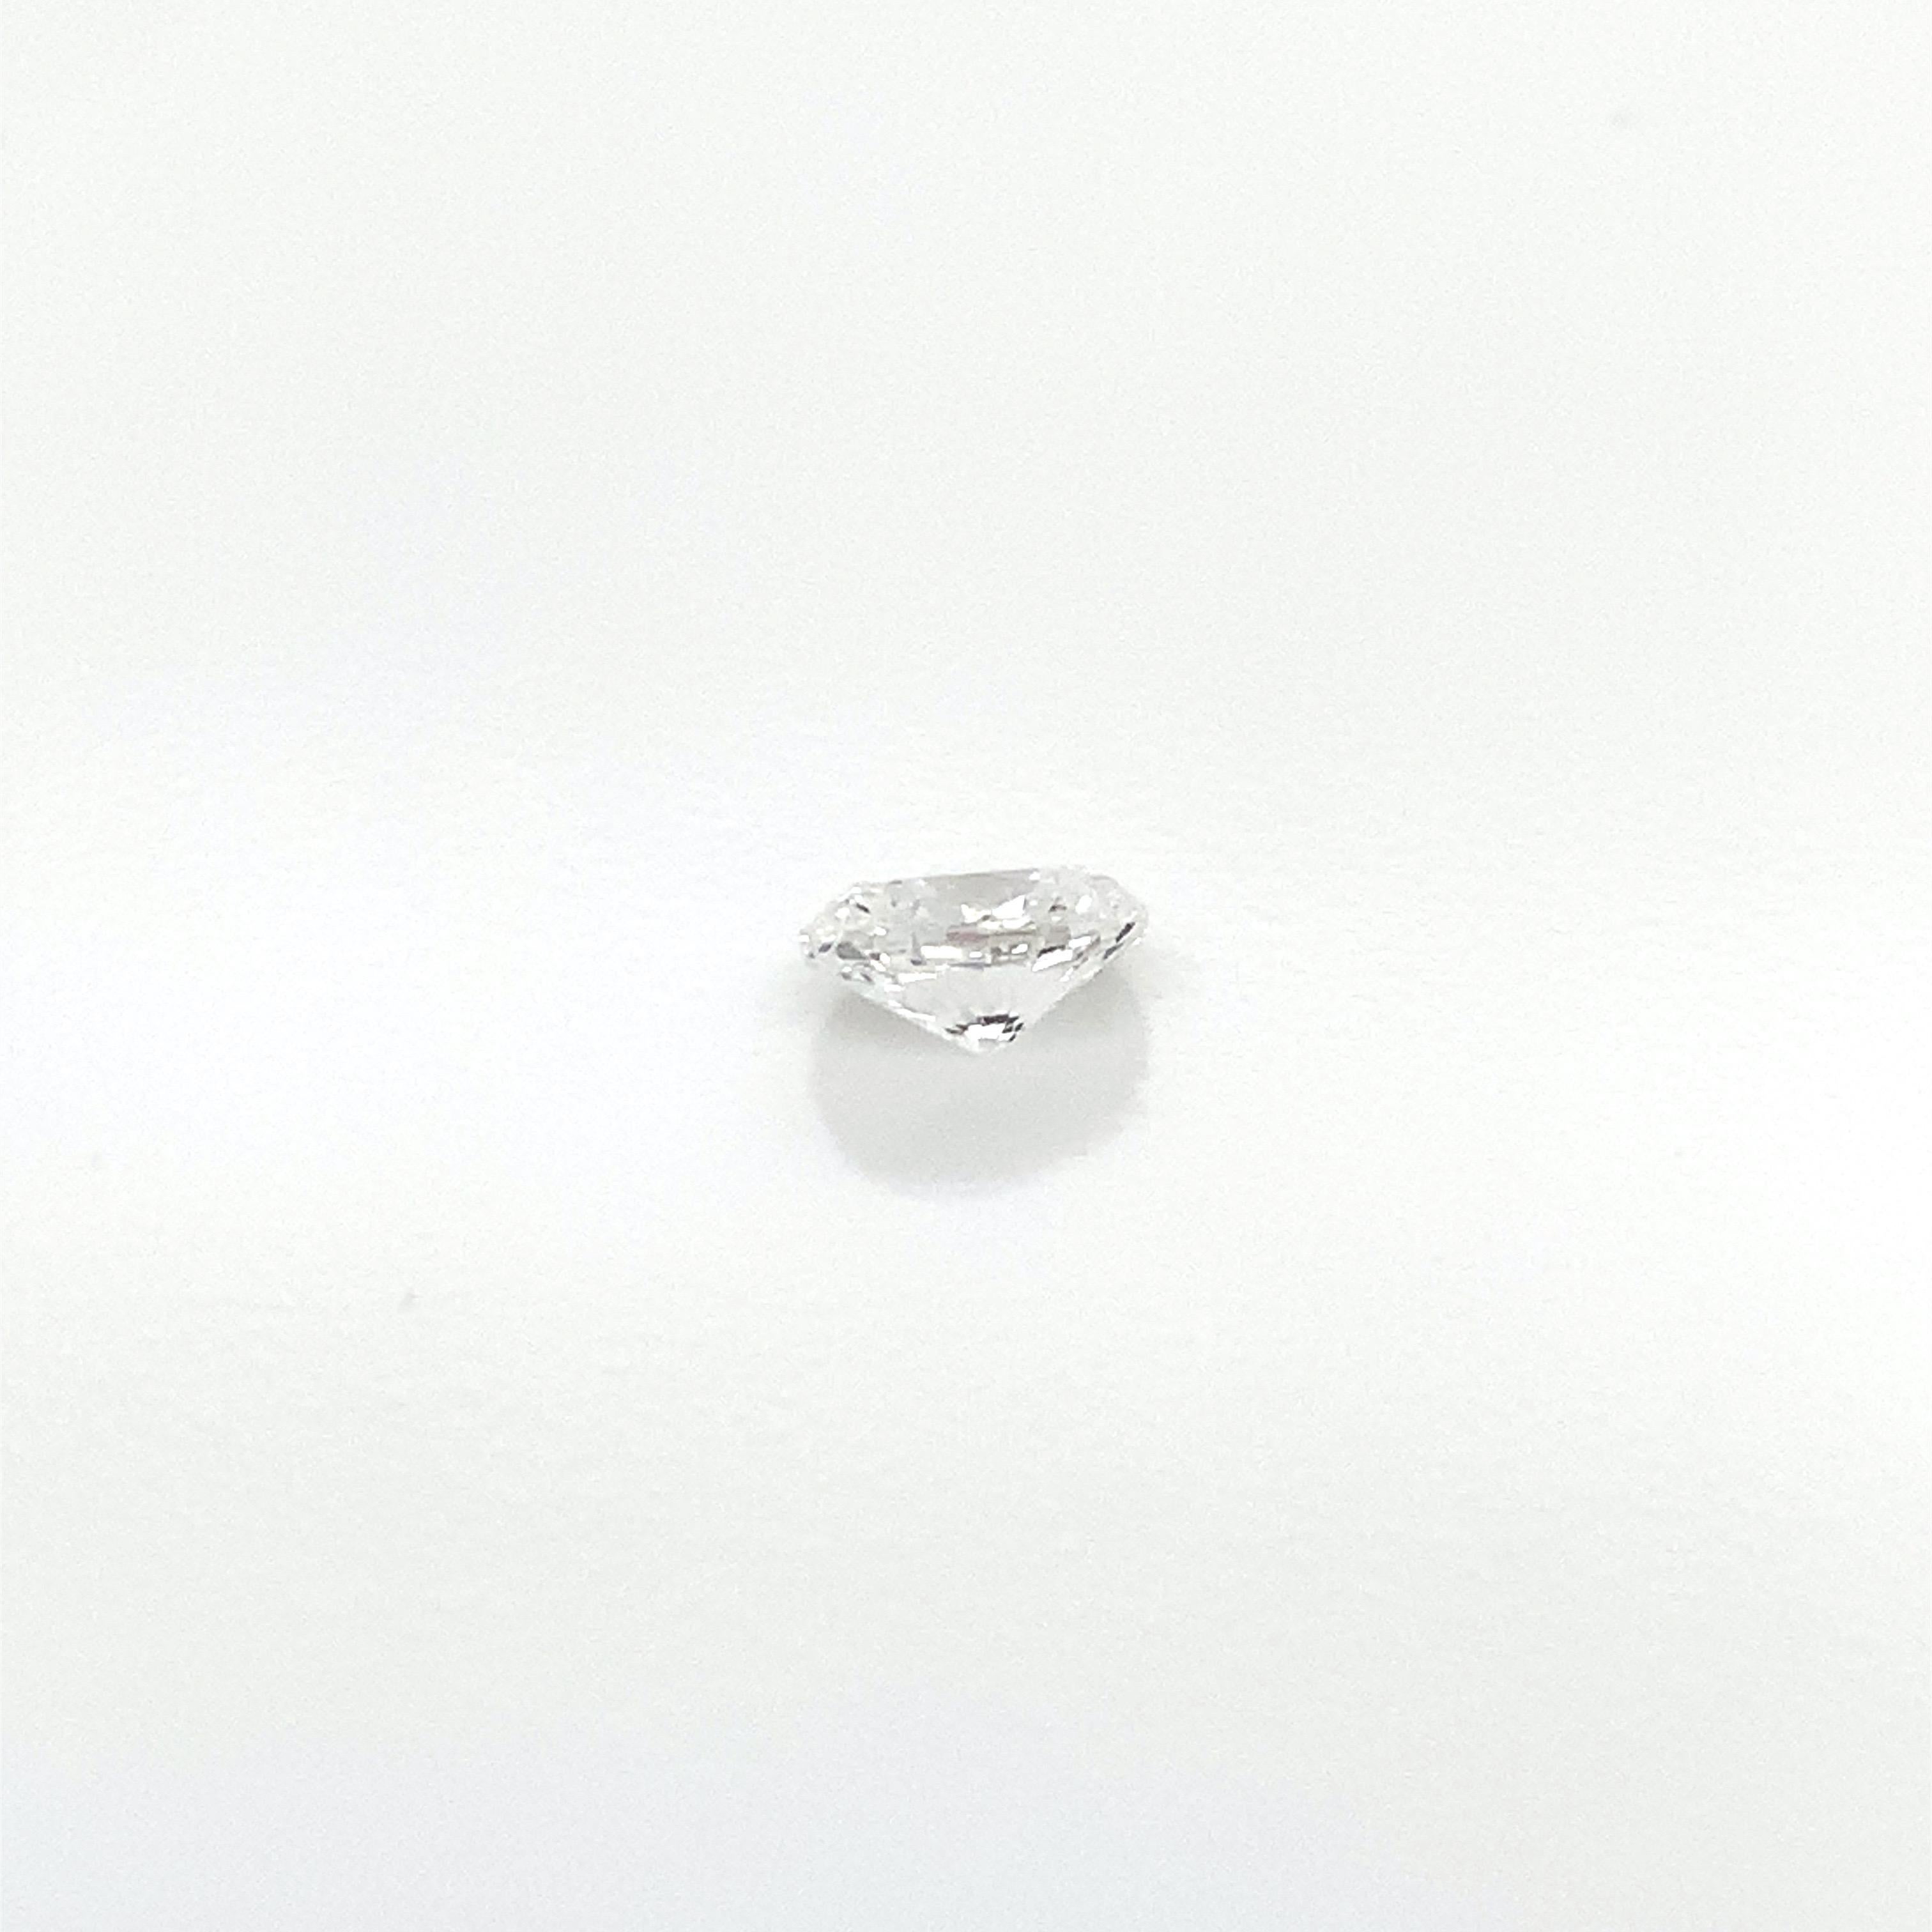 Oval Cut GIA Certified 0.39 Carat Oval Brilliant Diamond For Sale